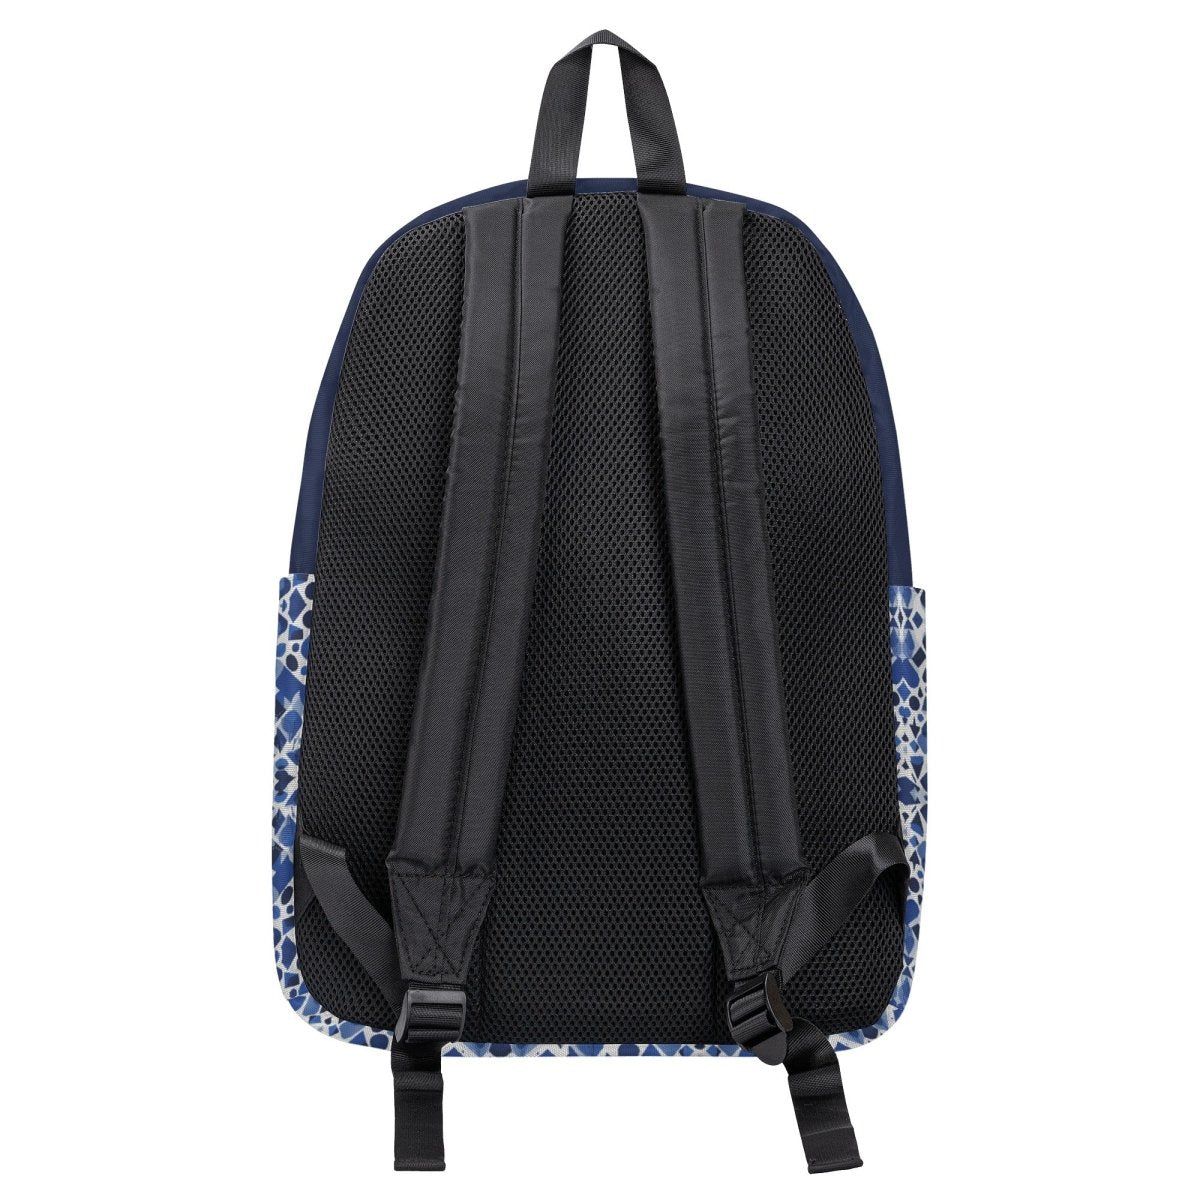 Blue and White Fashion Backpack - Iron Phoenix GHG